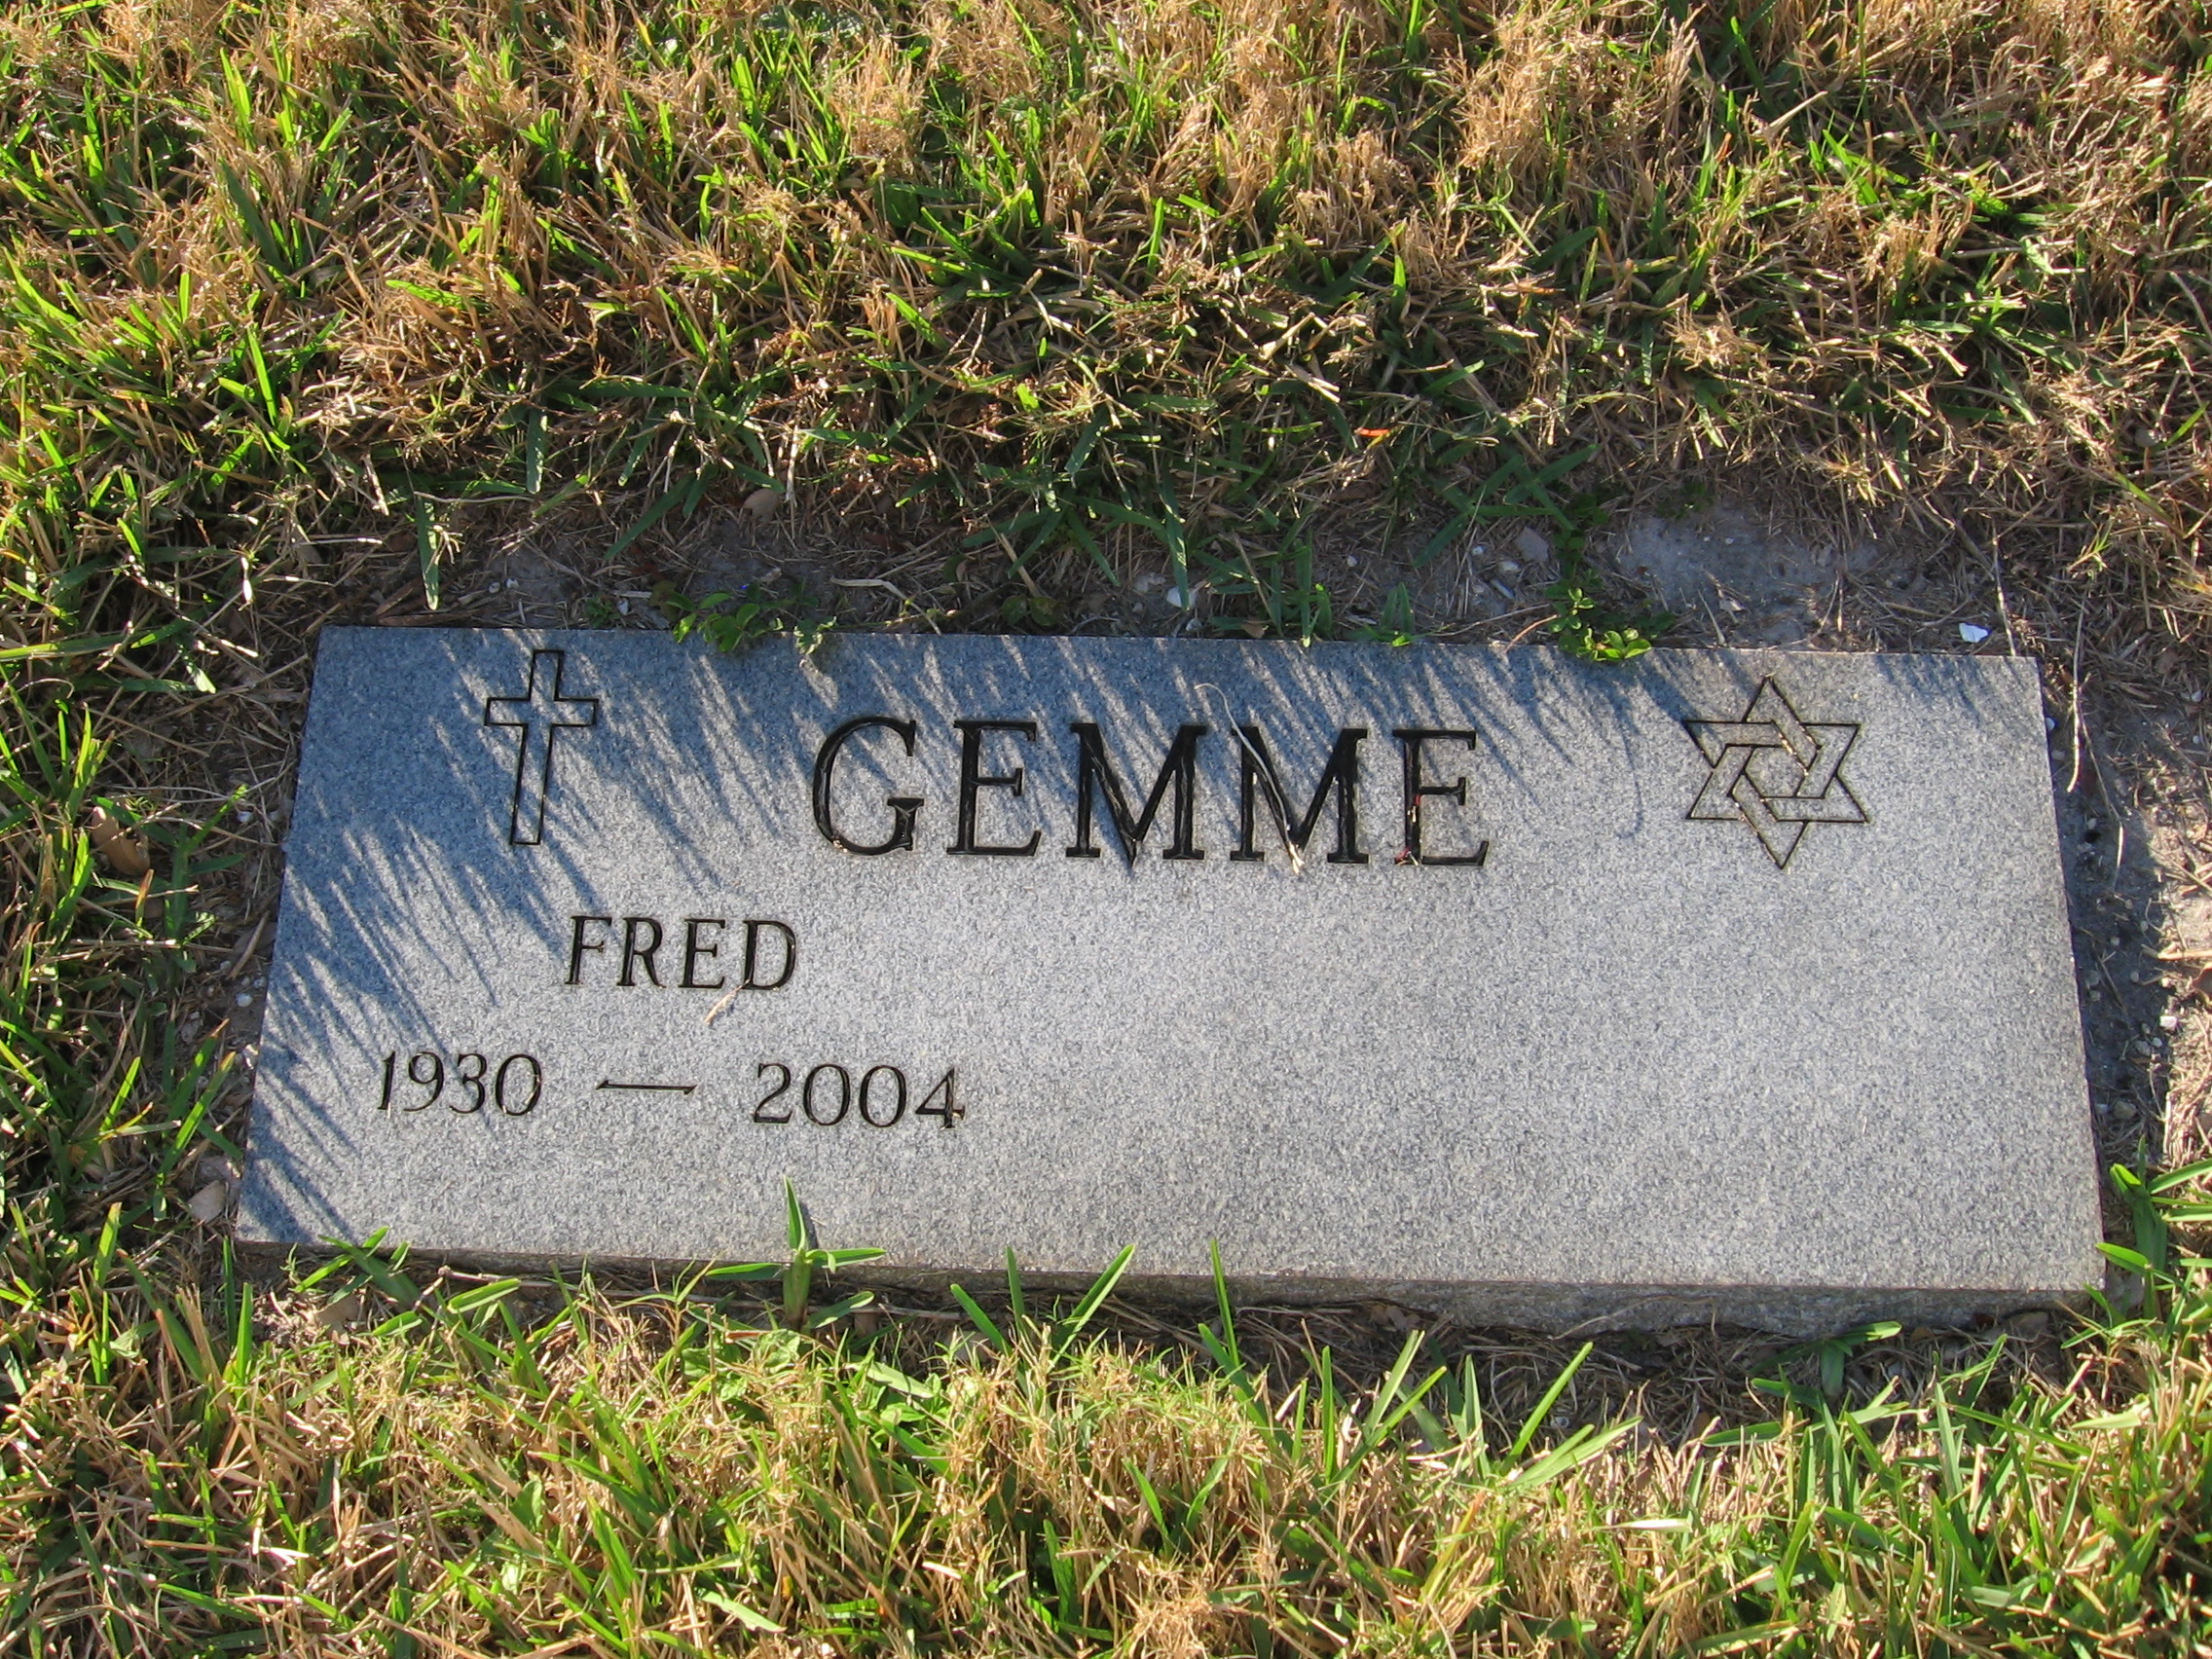 Fred Gemme